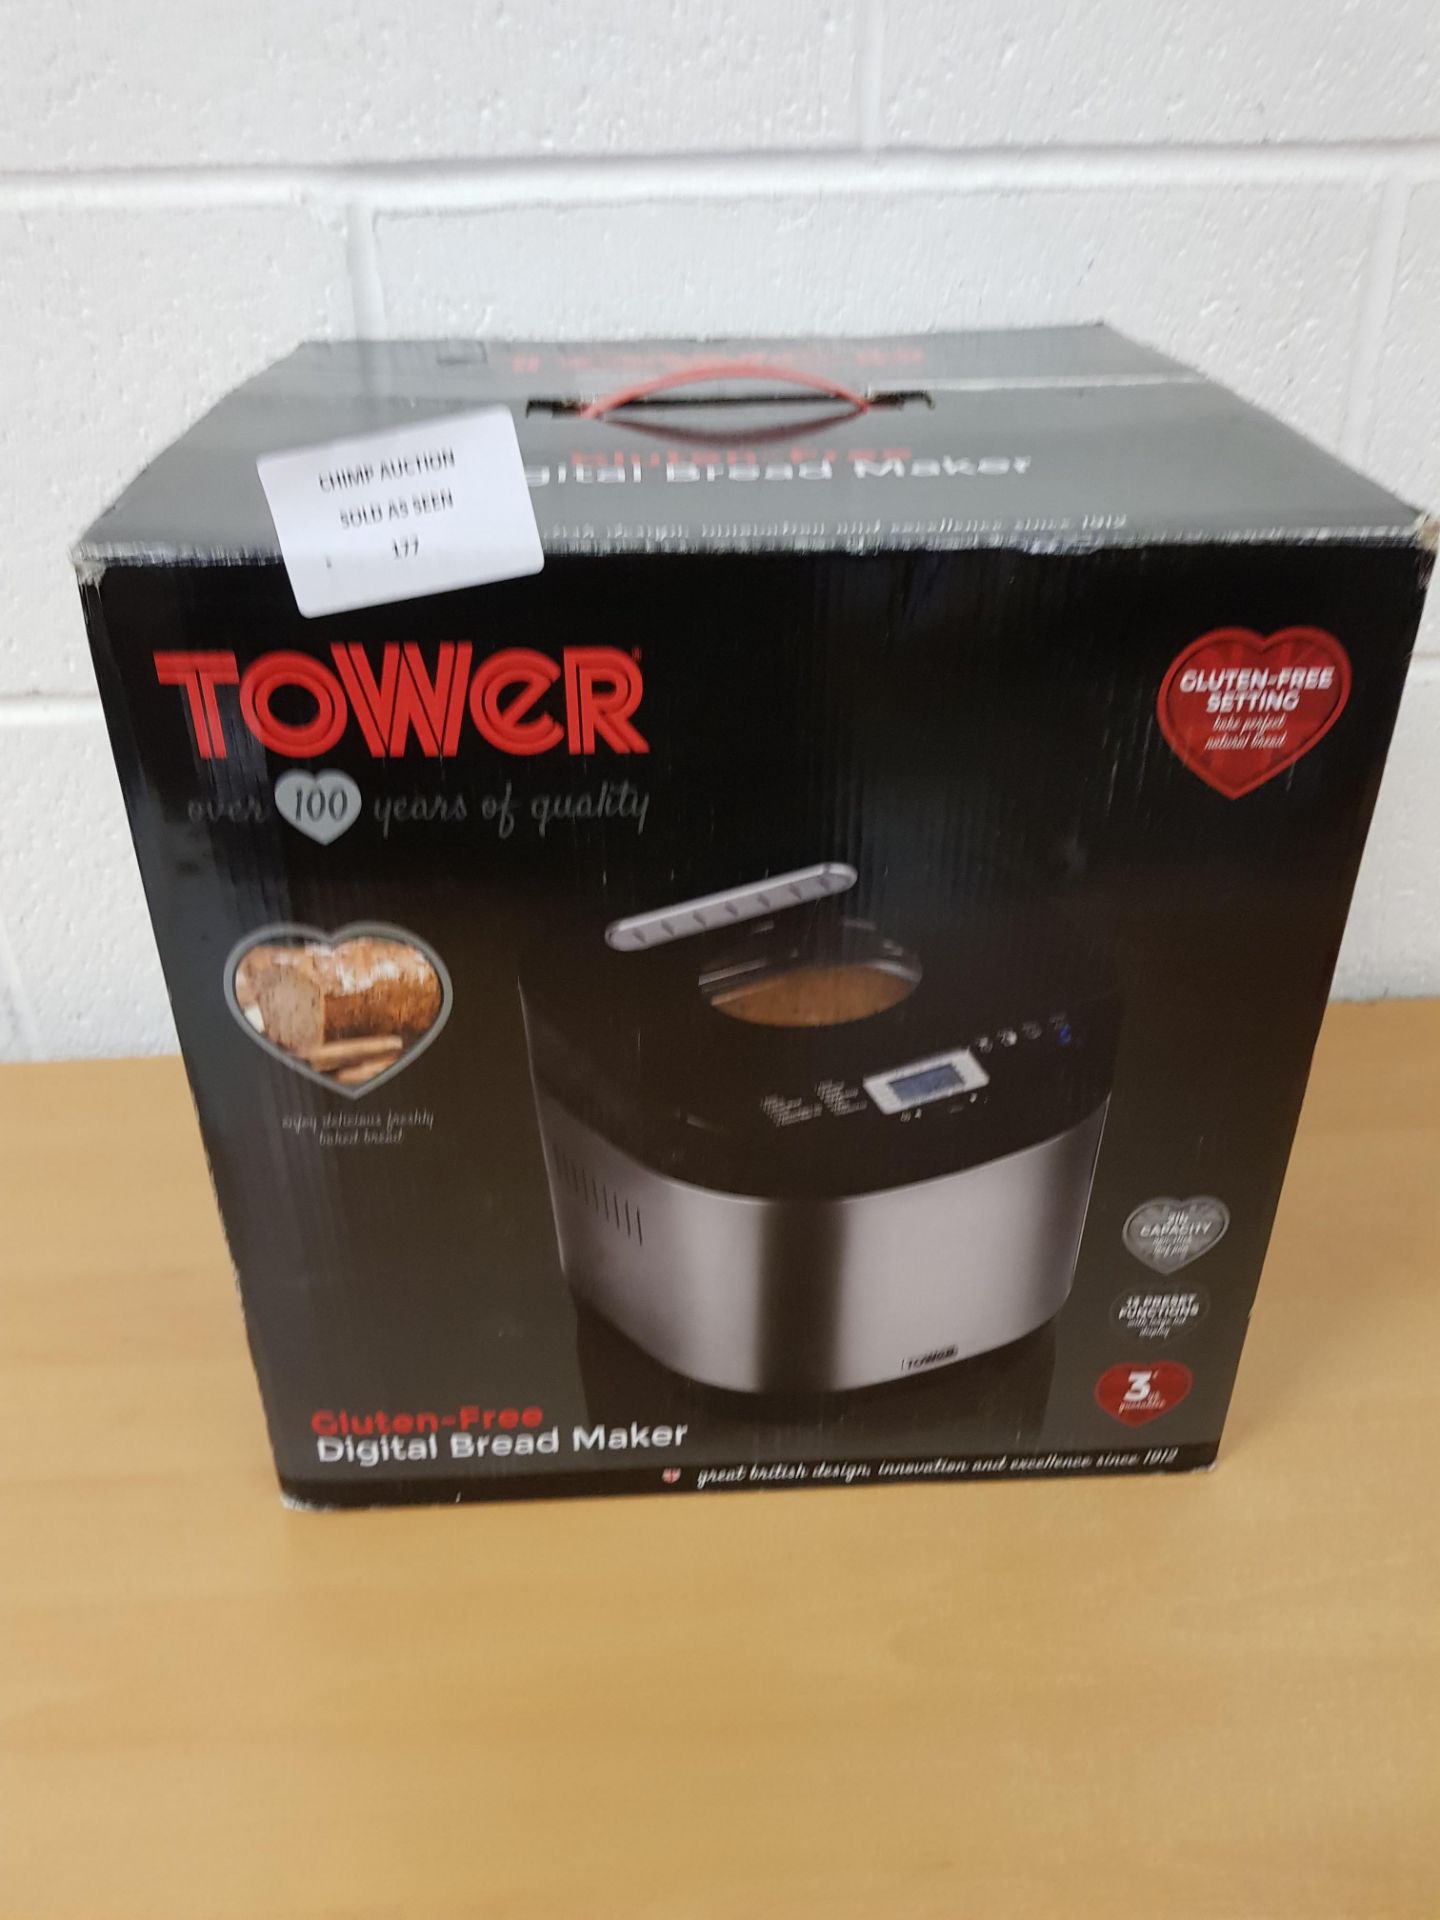 Tower Gluten-Free Digital Bread Maker